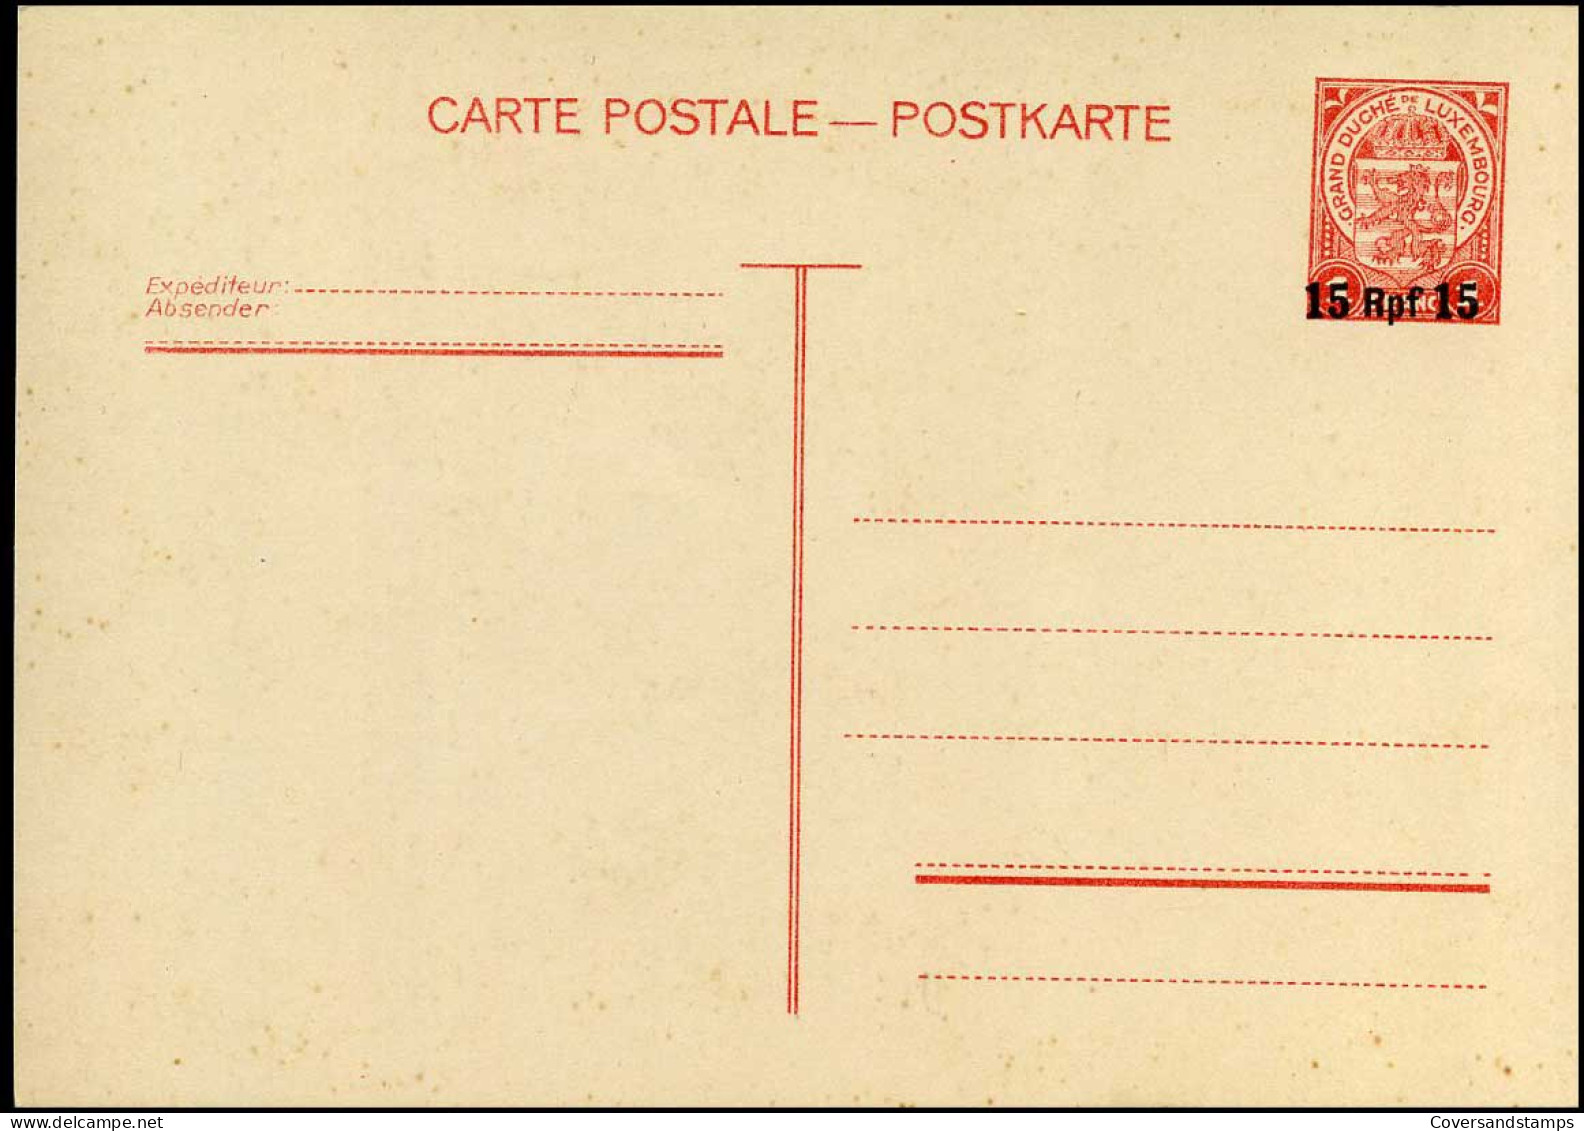 Luxembourg - Post Card - 15 Rpf On 1 Franc - Ganzsachen